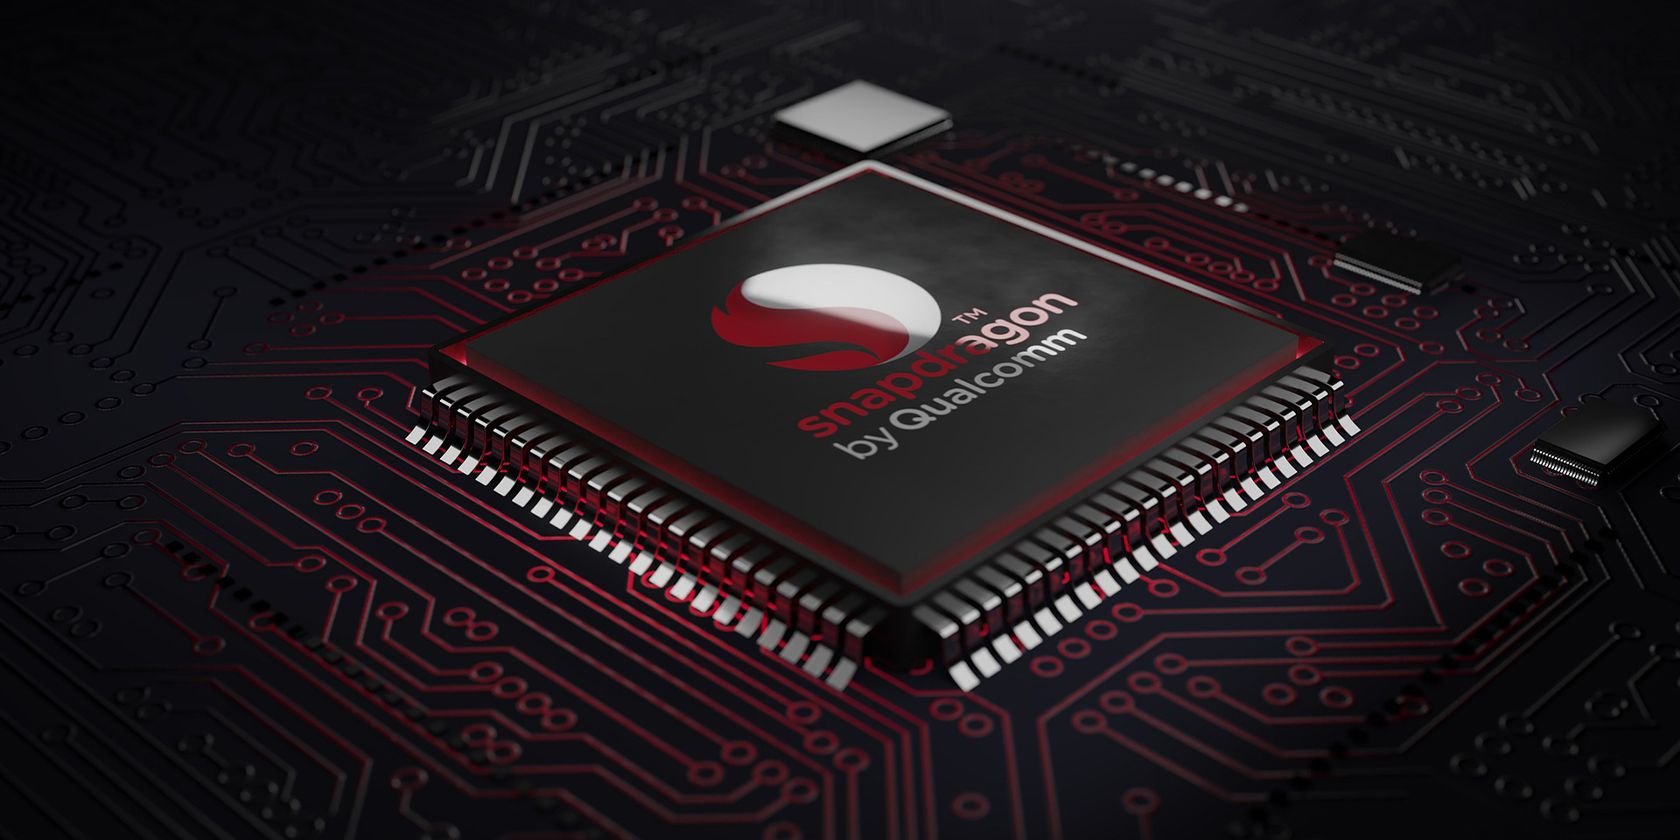 Snapdragon processor on a board